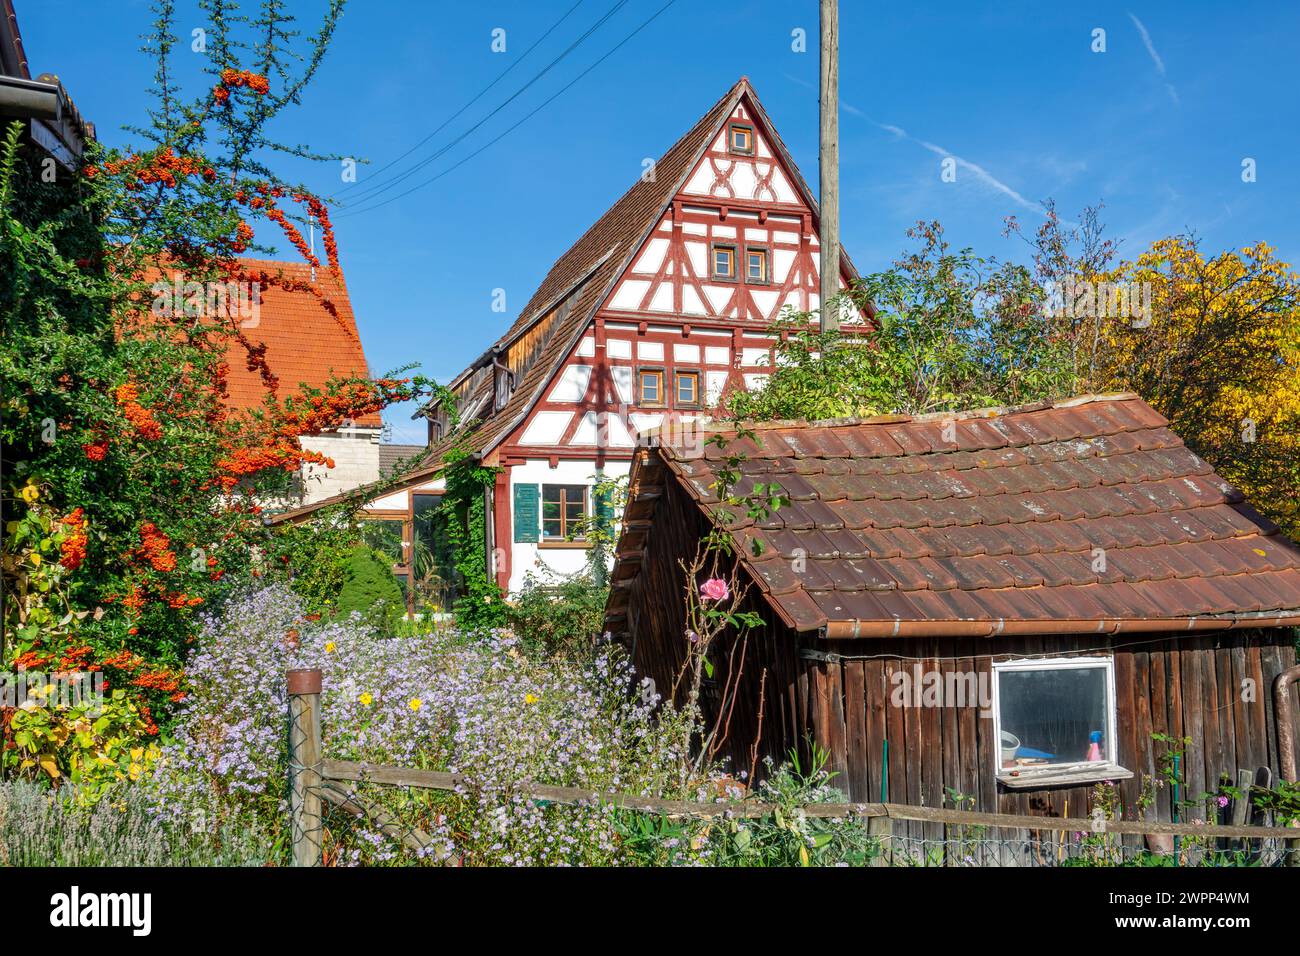 Nehren, district of Tübingen, half-timbered gable on the house at Hauchlinger Straße 27. Farm garden with garden house, flowers and sea buckthorn Stock Photo